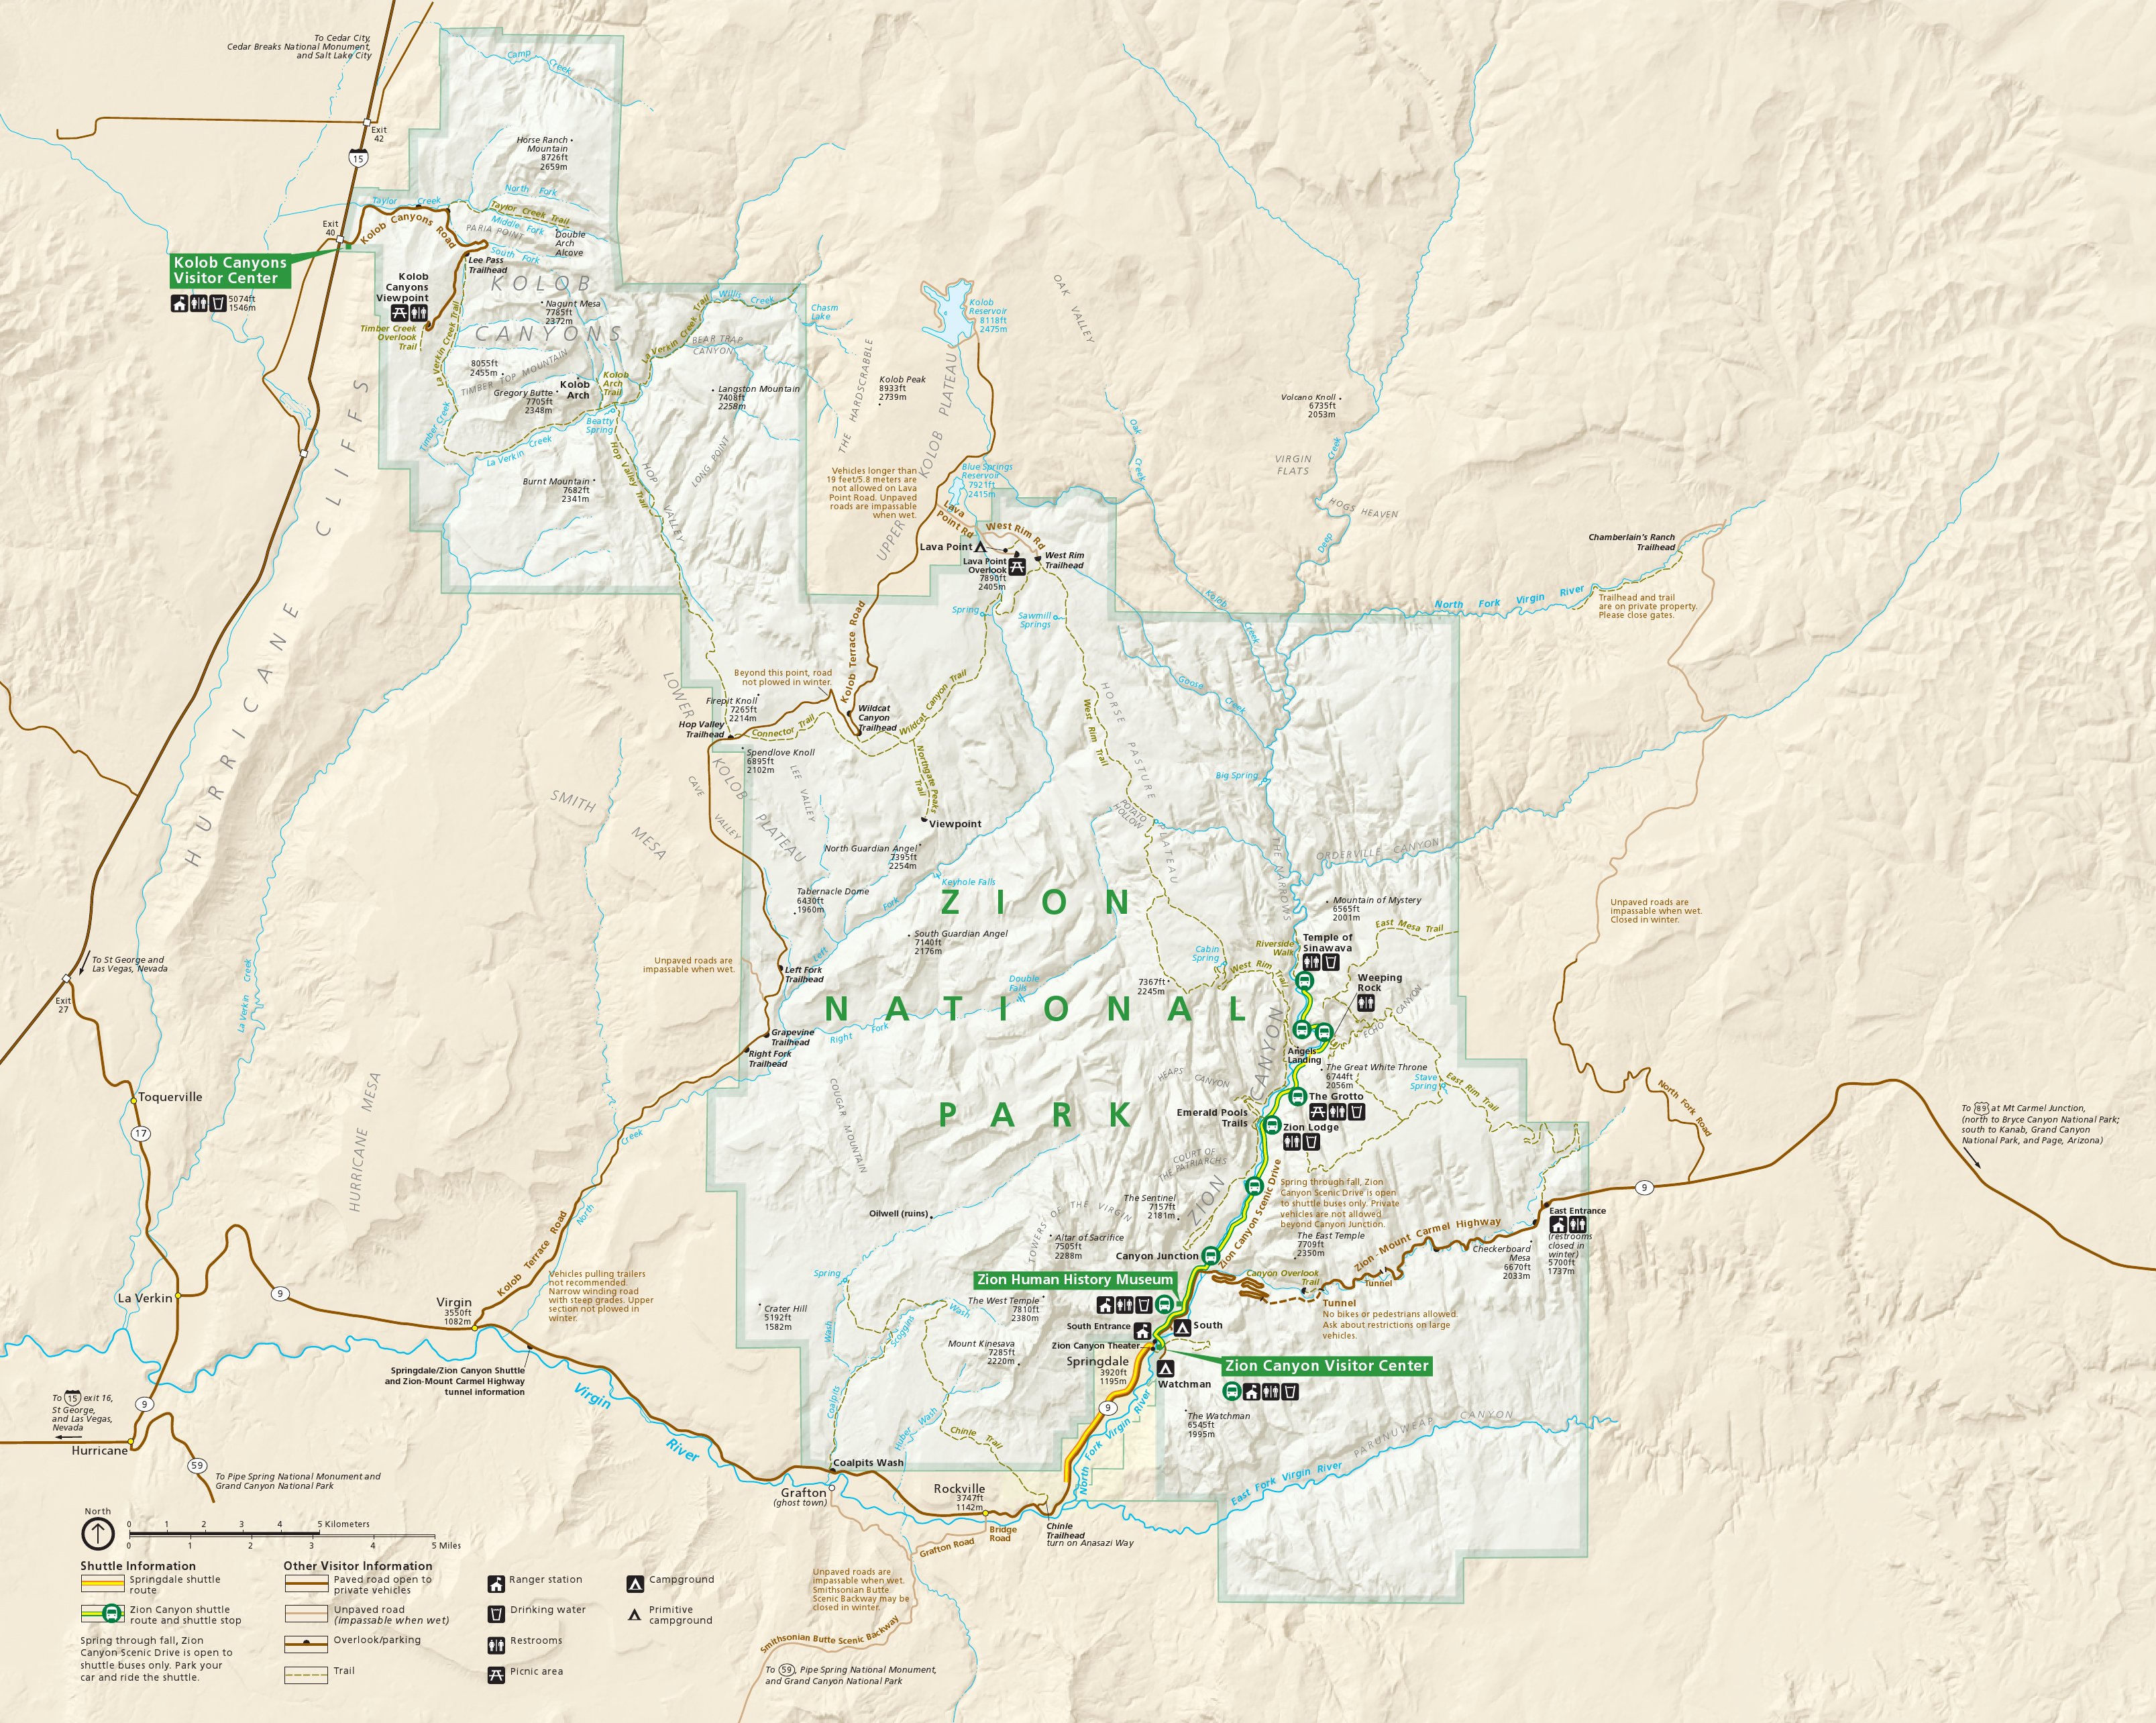 Fallout: New Vegas, Interactive map of Zion Canyon